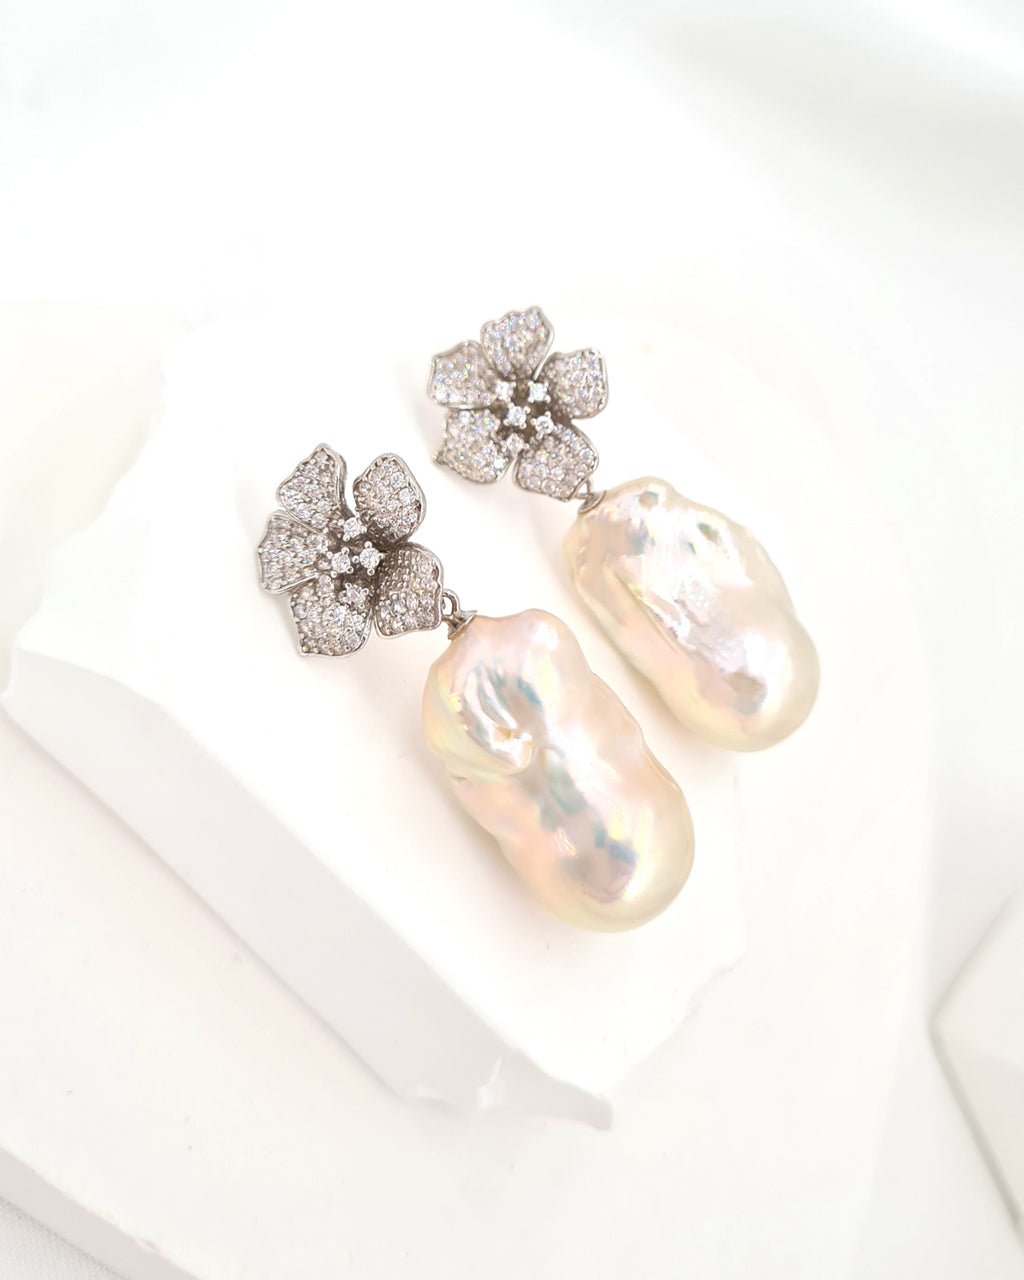 Baroque Pearl Earrings - Floral Big White Baroque Pearl Drop Earrings, Singapore